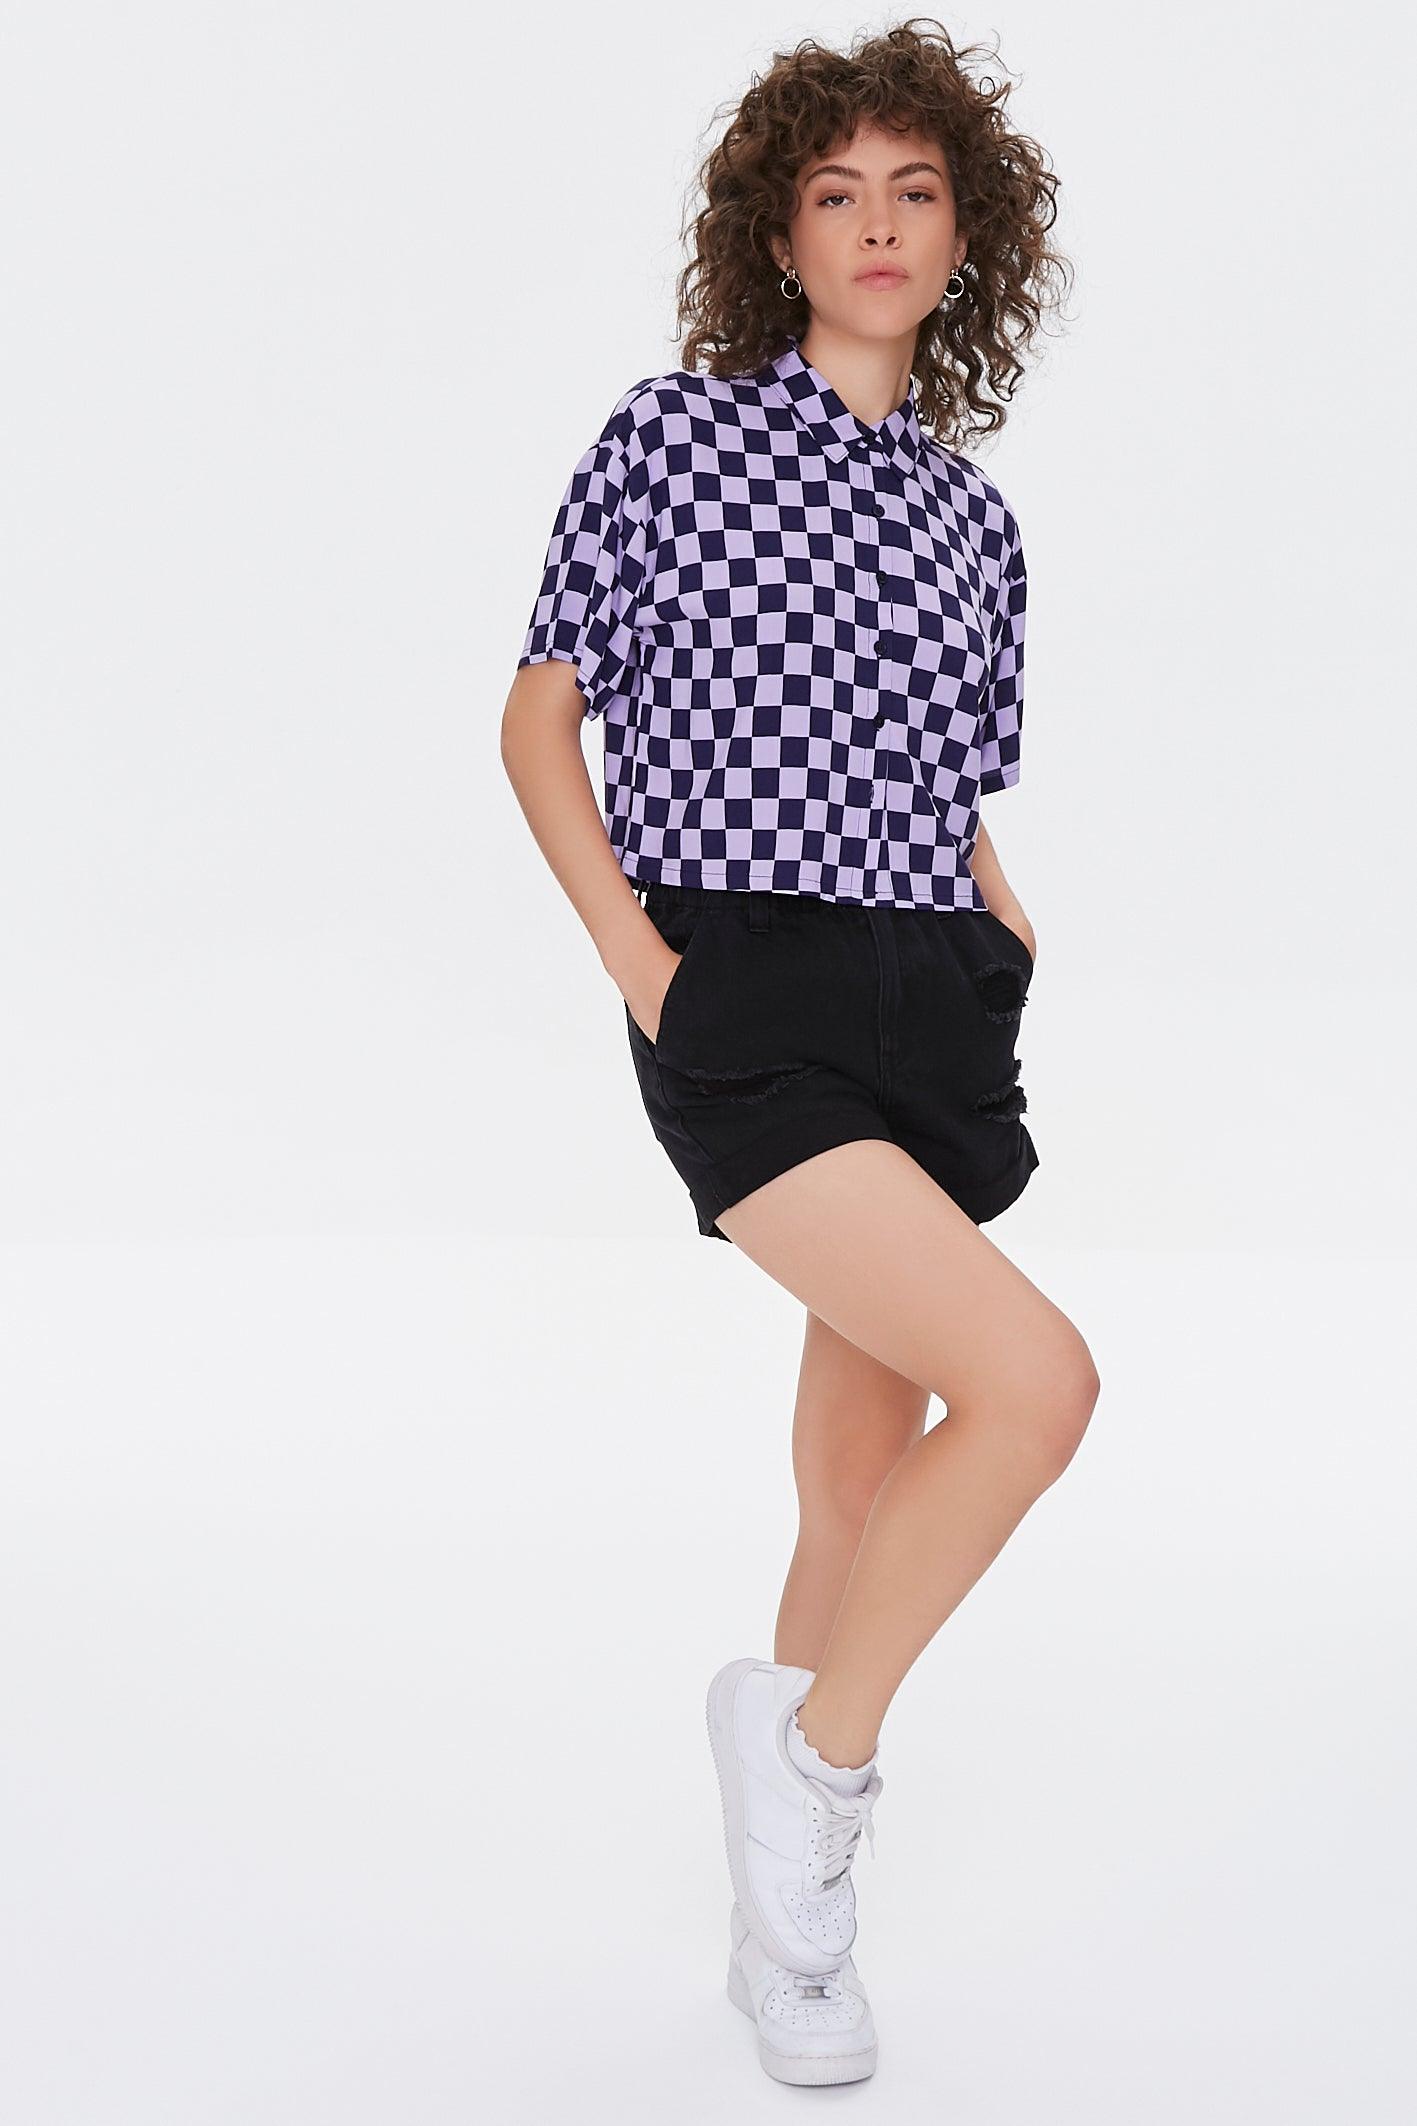 Lavendernavy Checkered Print Shirt  4